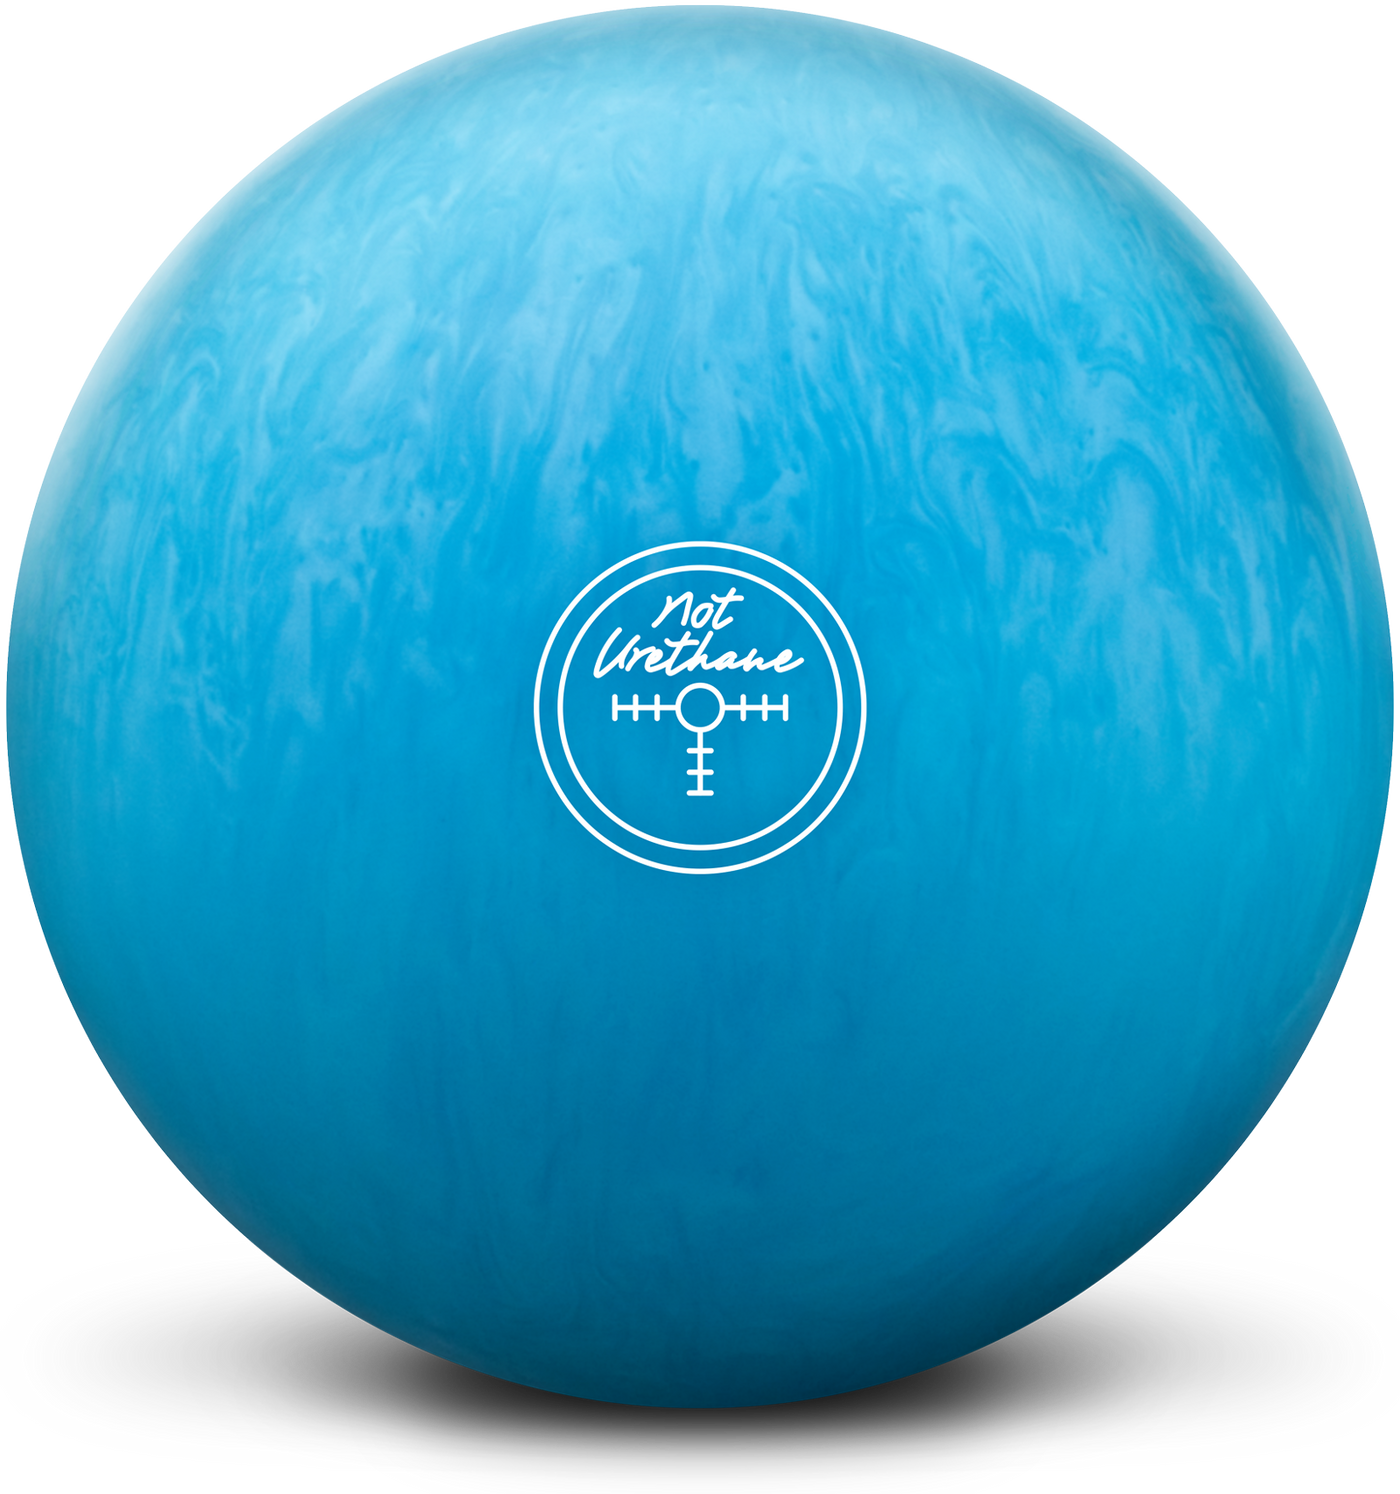 NU Blue Hammer bowling ball Center of Gravity logo side